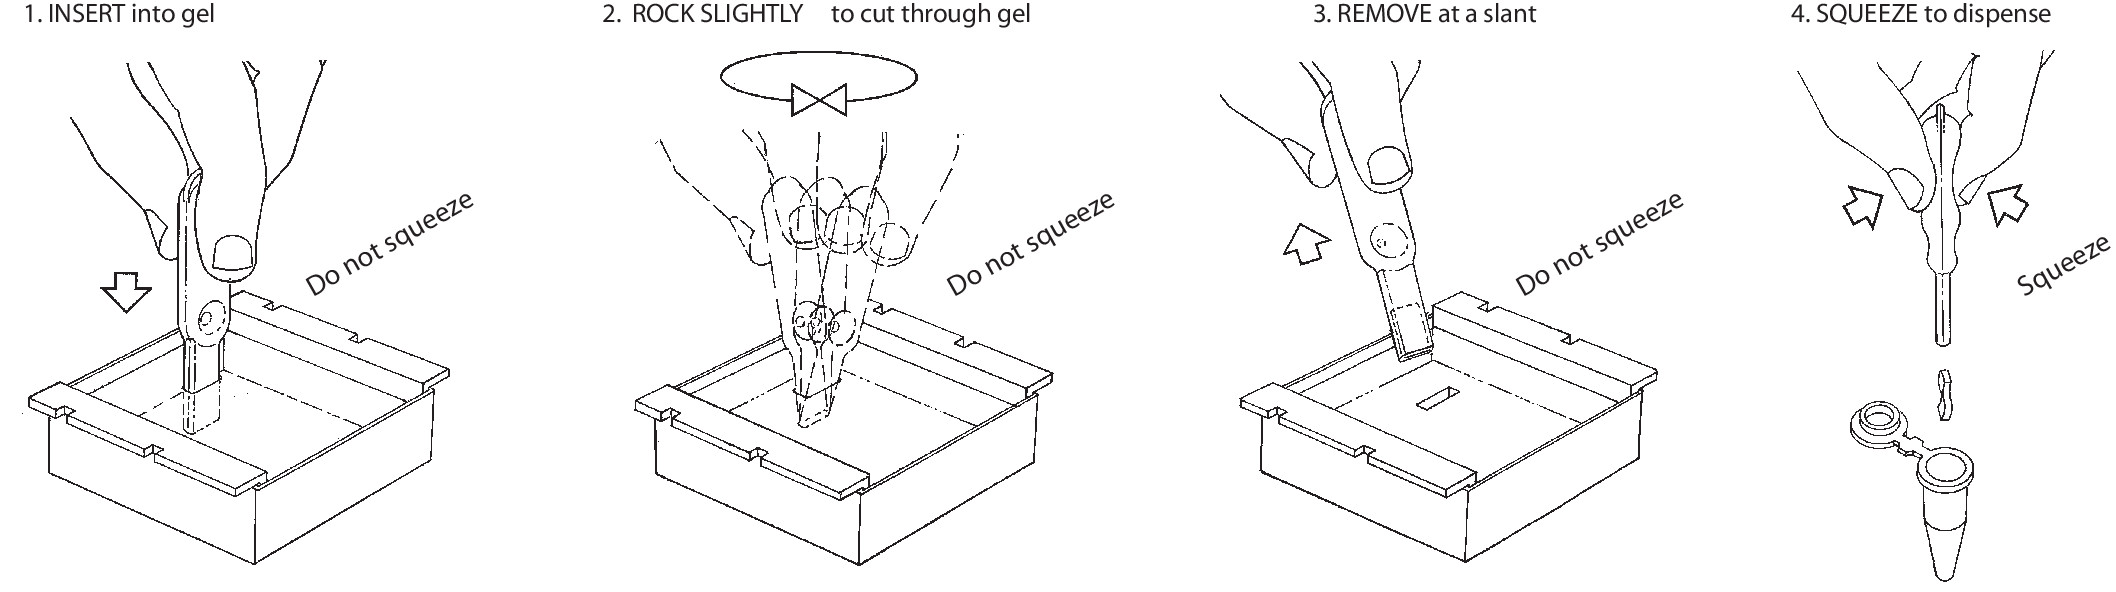 xtracta method to remove gel slices